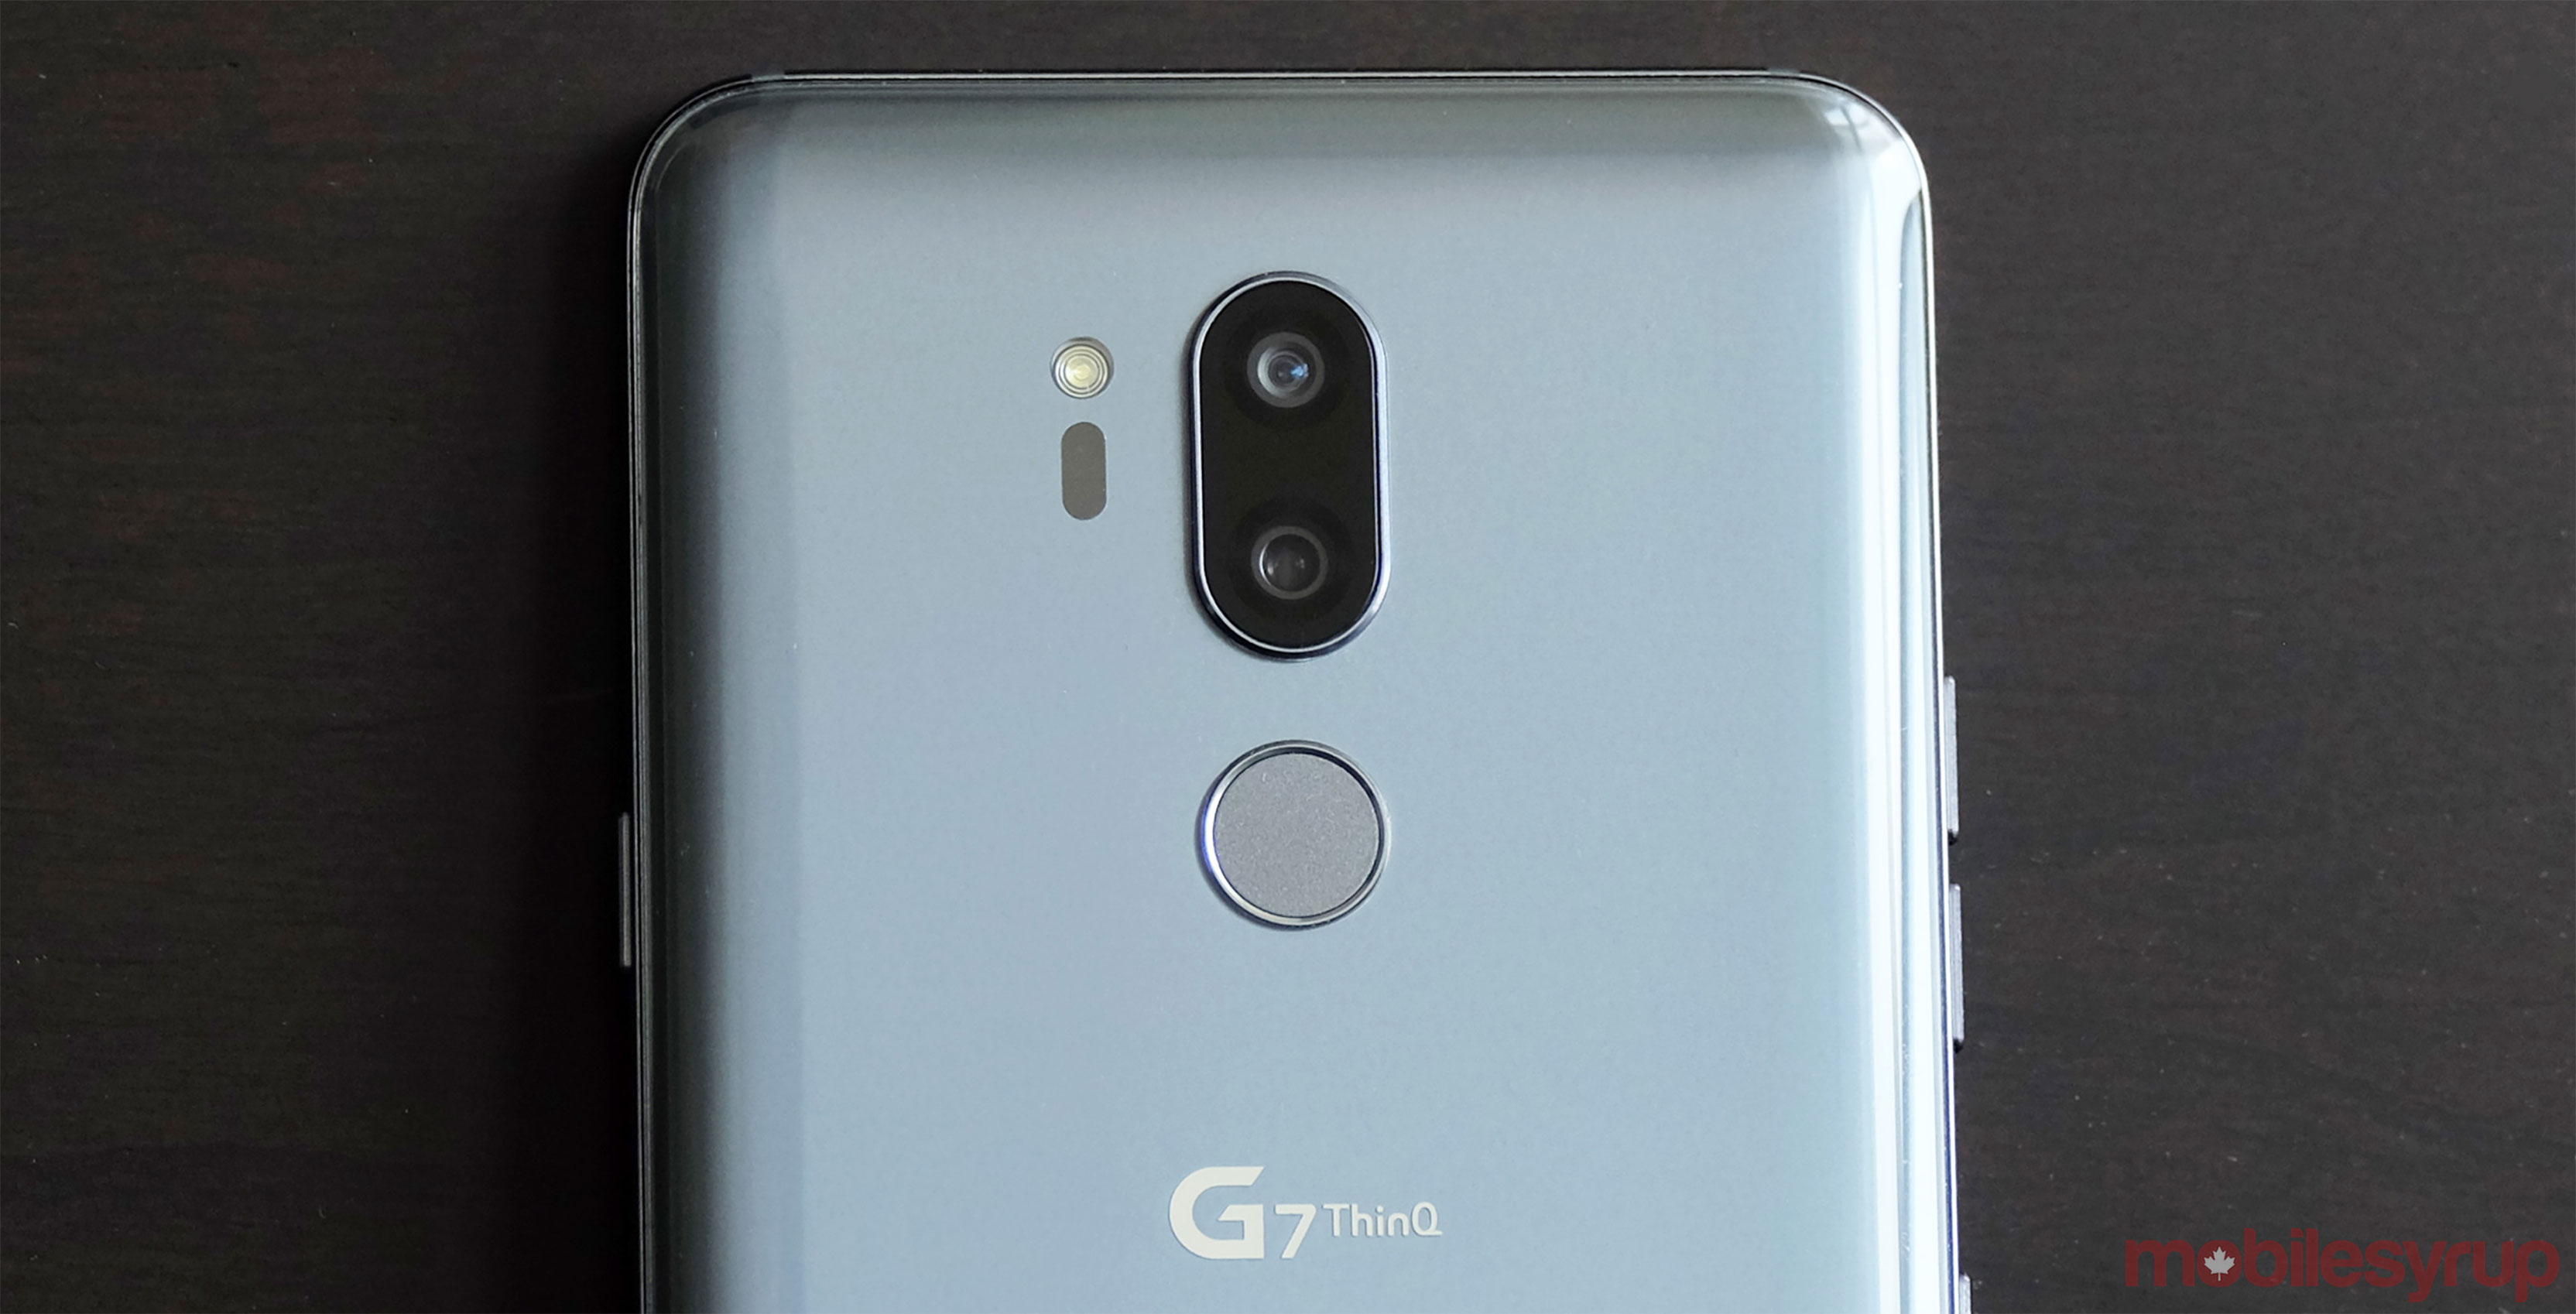 LG G7 Thin Q camera